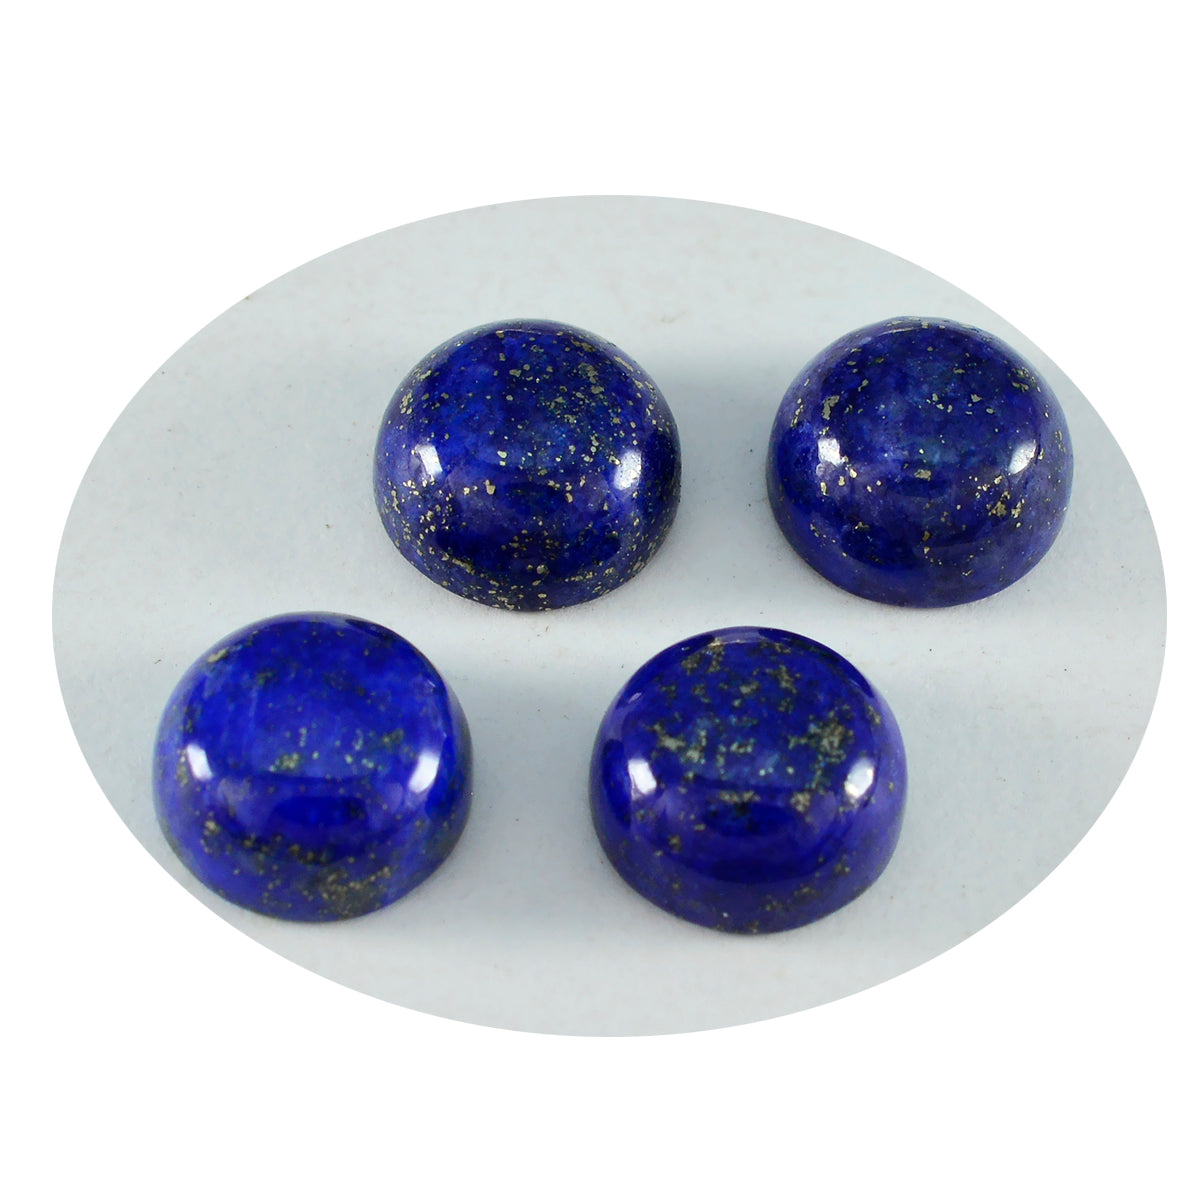 Riyogems 1PC blauwe lapis lazuli cabochon 8x8 mm ronde vorm mooie kwaliteit losse edelsteen